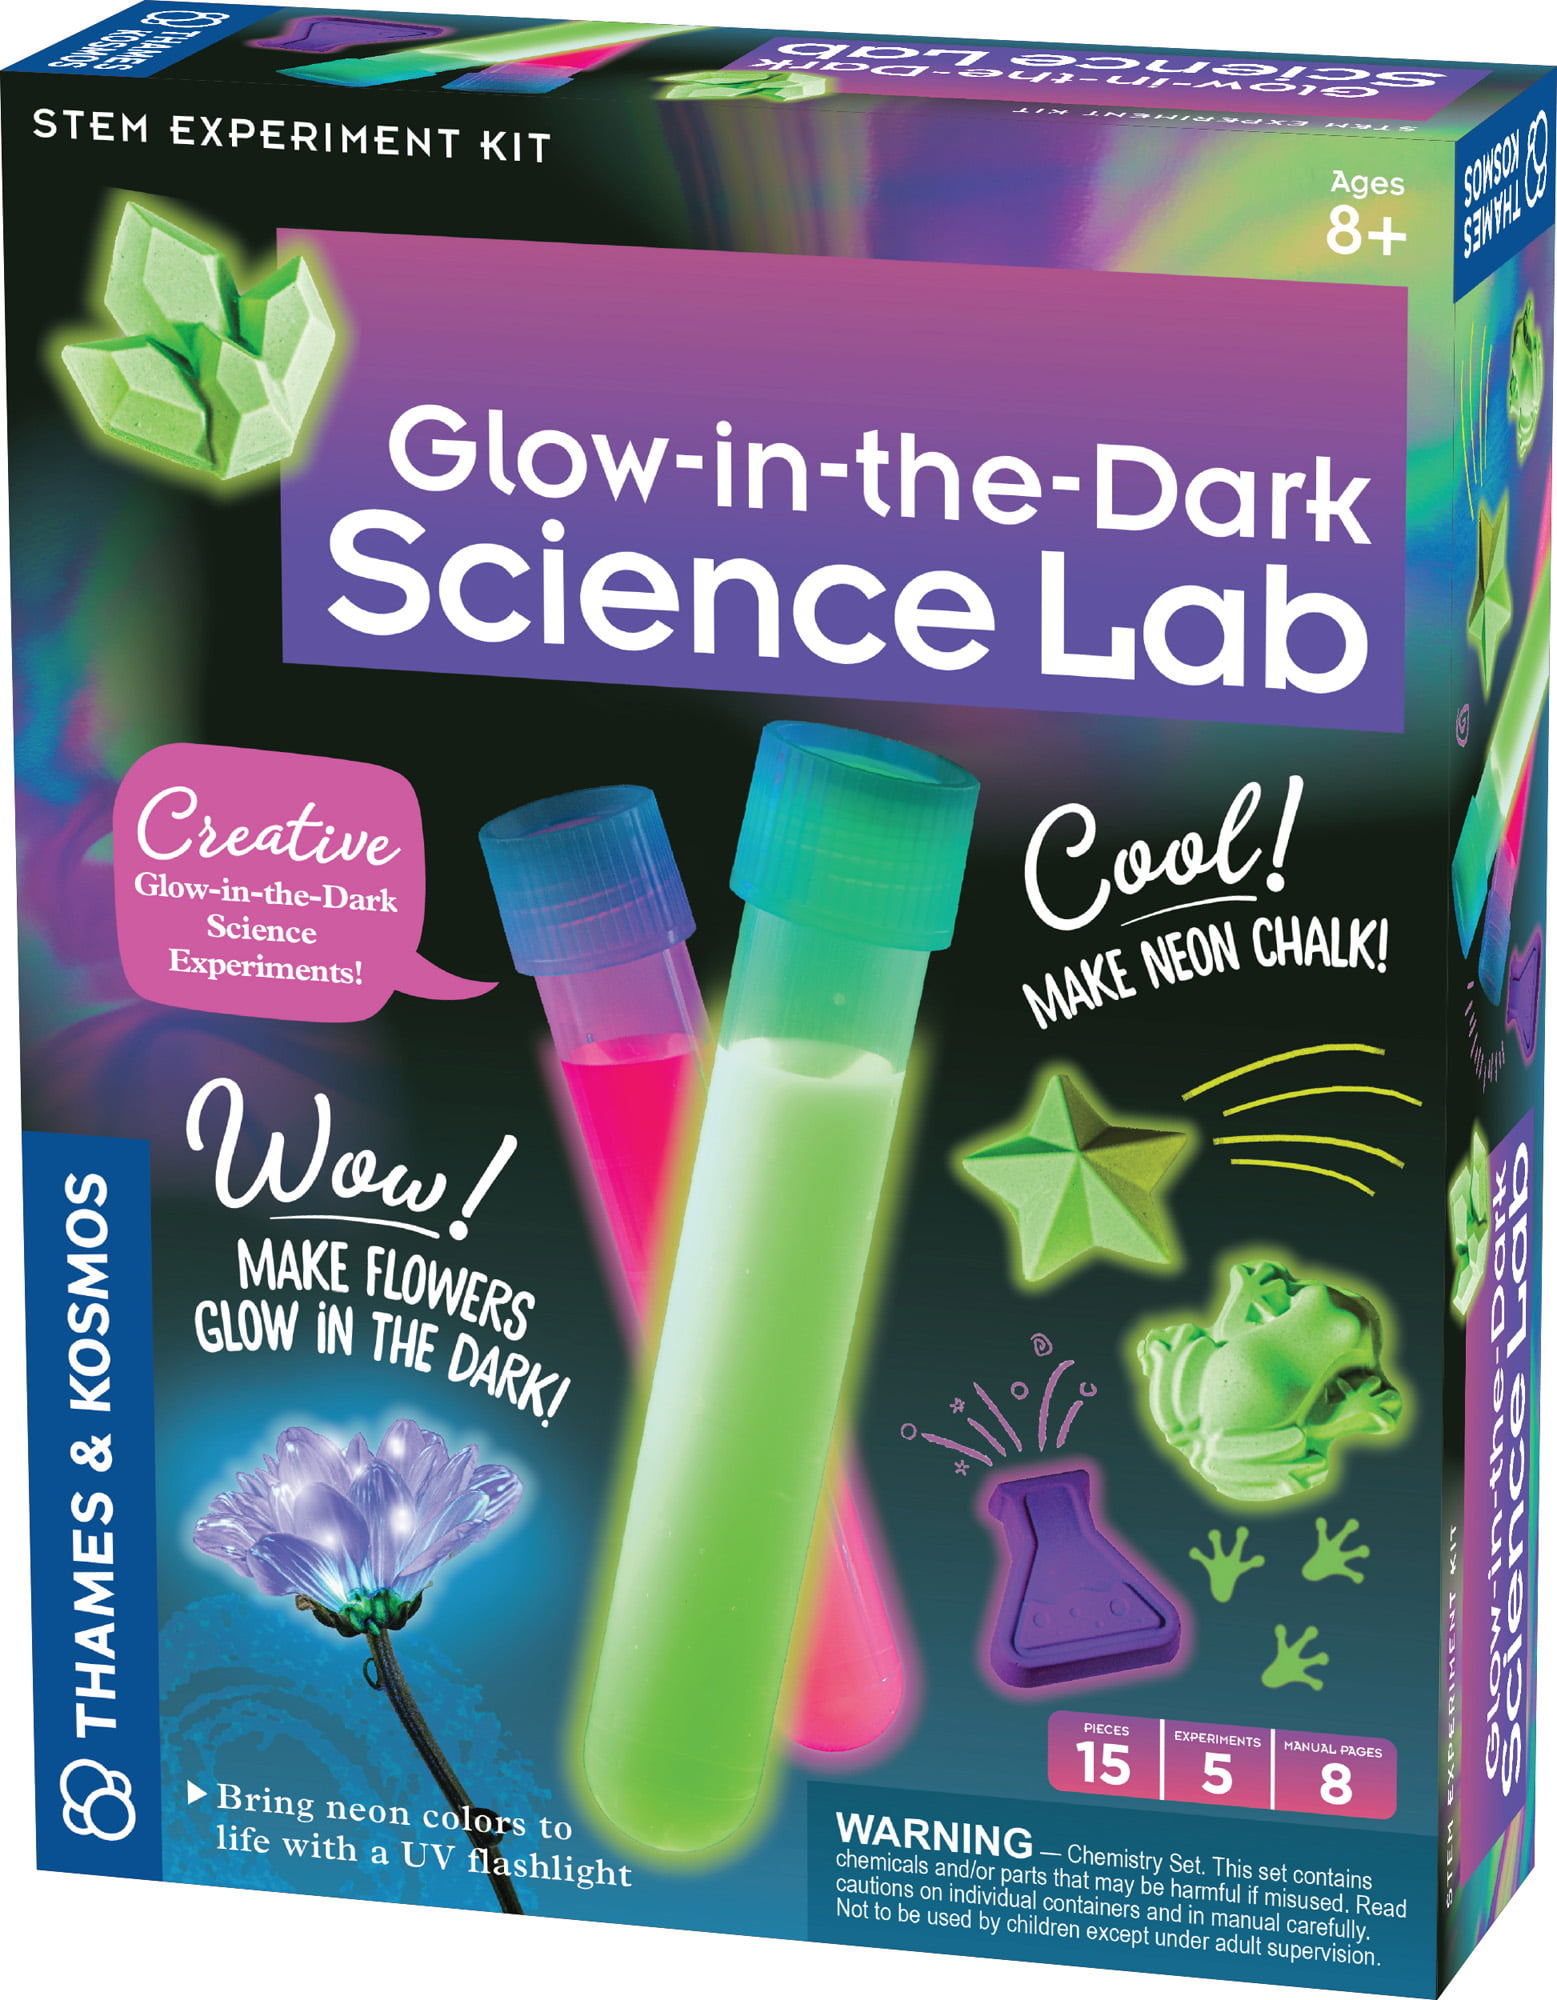 Lab-in-a-bag: Big Bag Of Glow In The Dark Science : Target